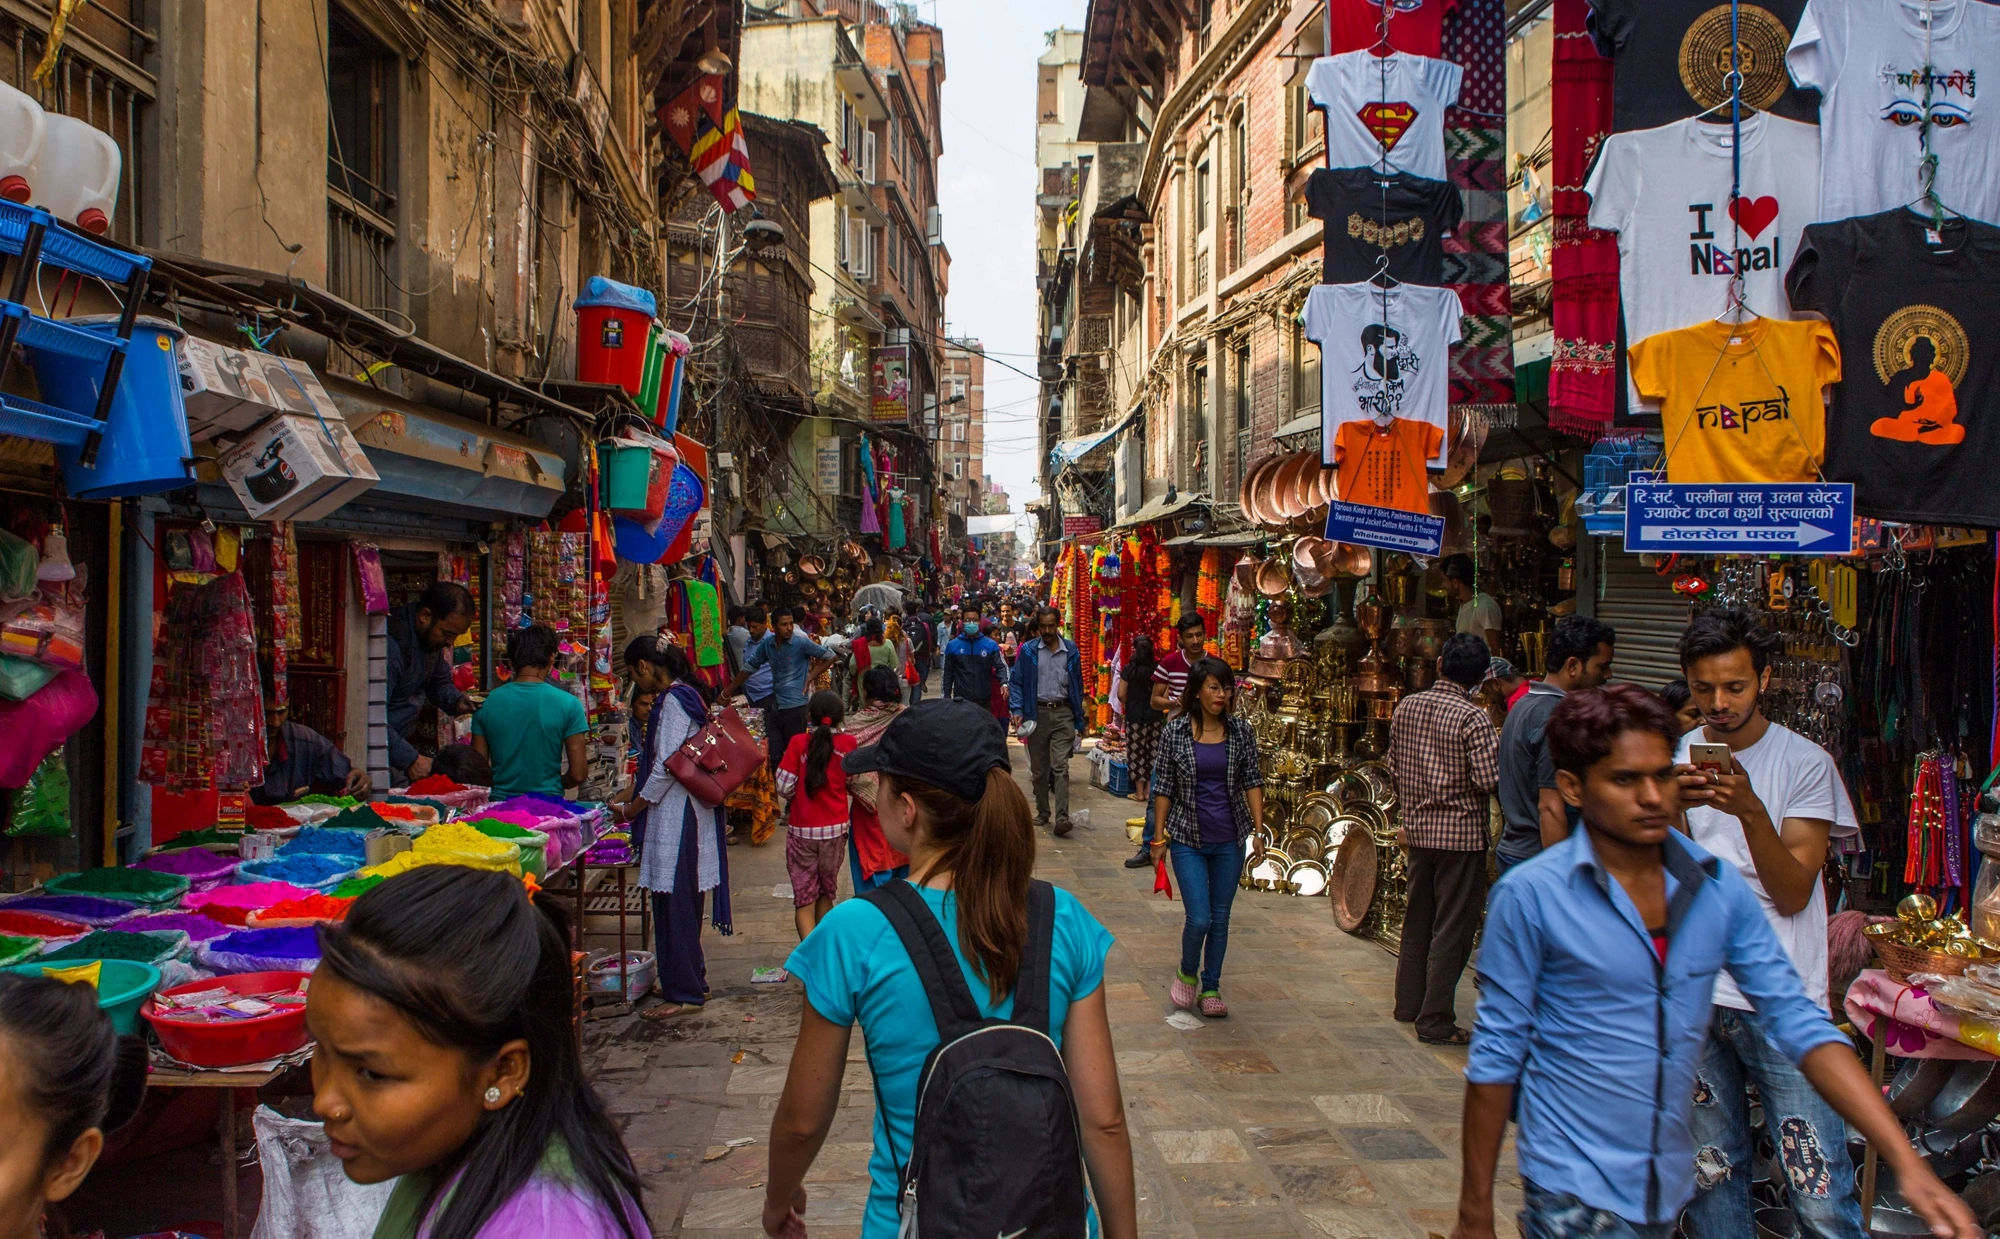 Crowded shopping street in Thamel of Kathmandu, Nepal. Photo: Damian Pankowiec / Shutterstock.com